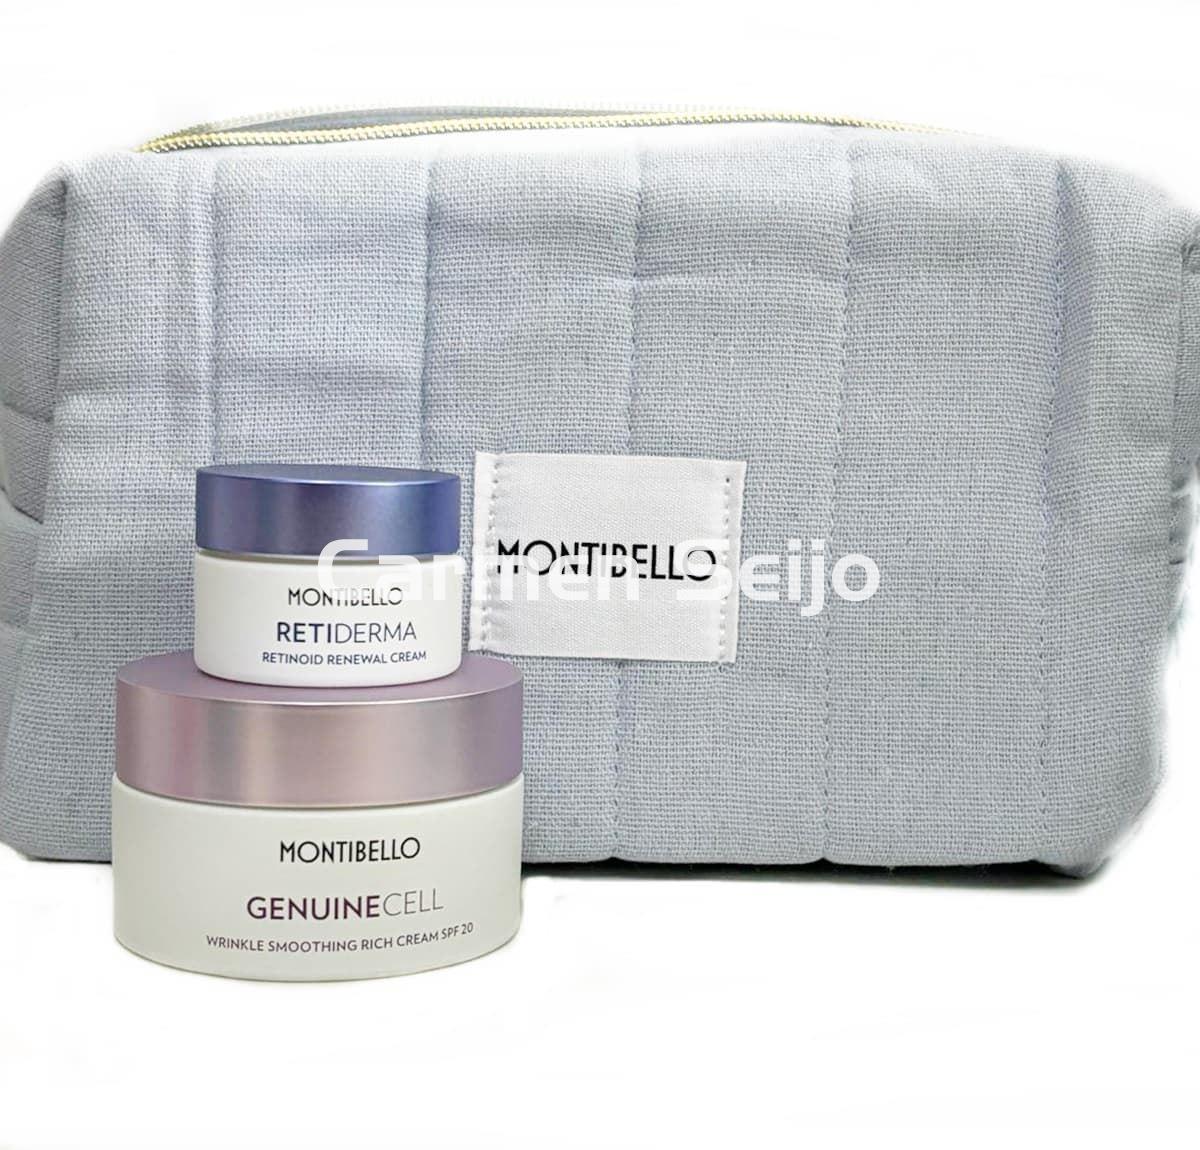 Montibello Pack Crema RICH Genuine Cell y Crema Retiderma Better Together - Imagen 1